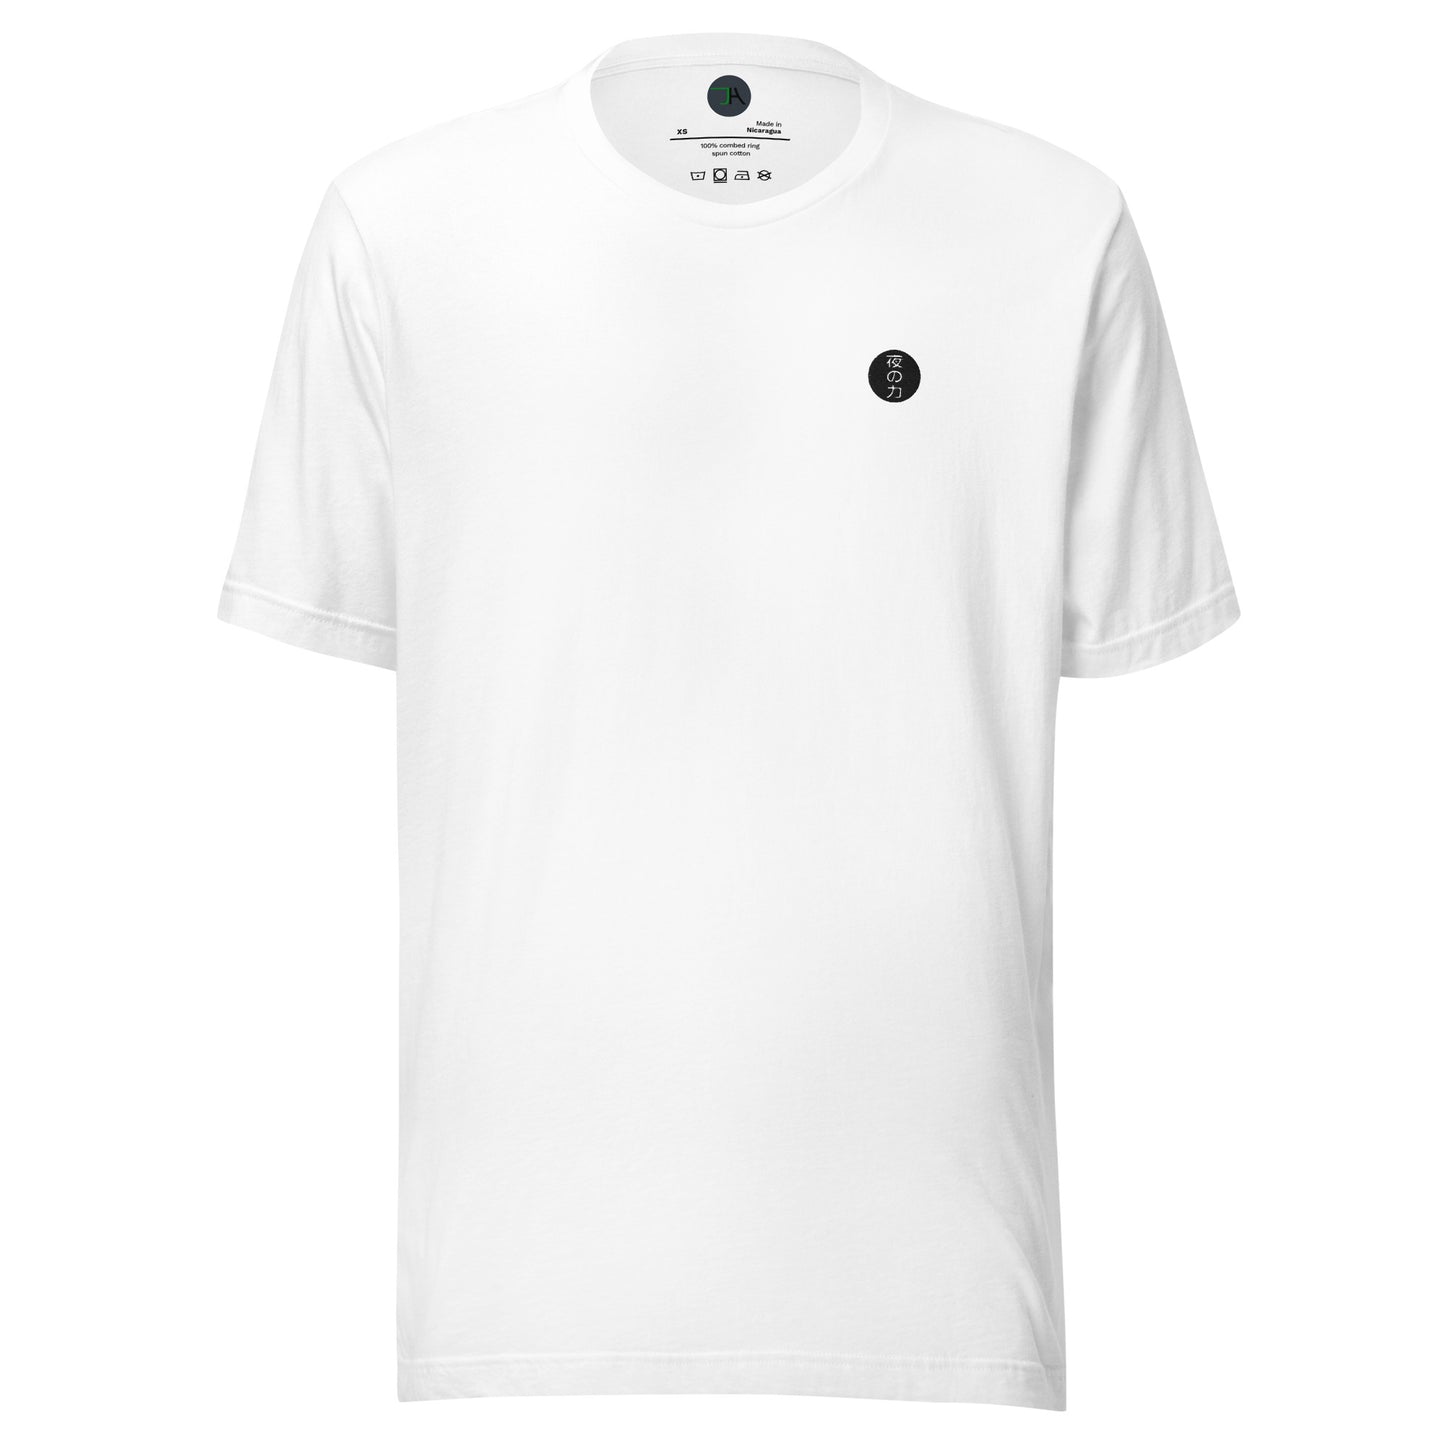 Yoru No Chikara Circle Unisex t-shirt